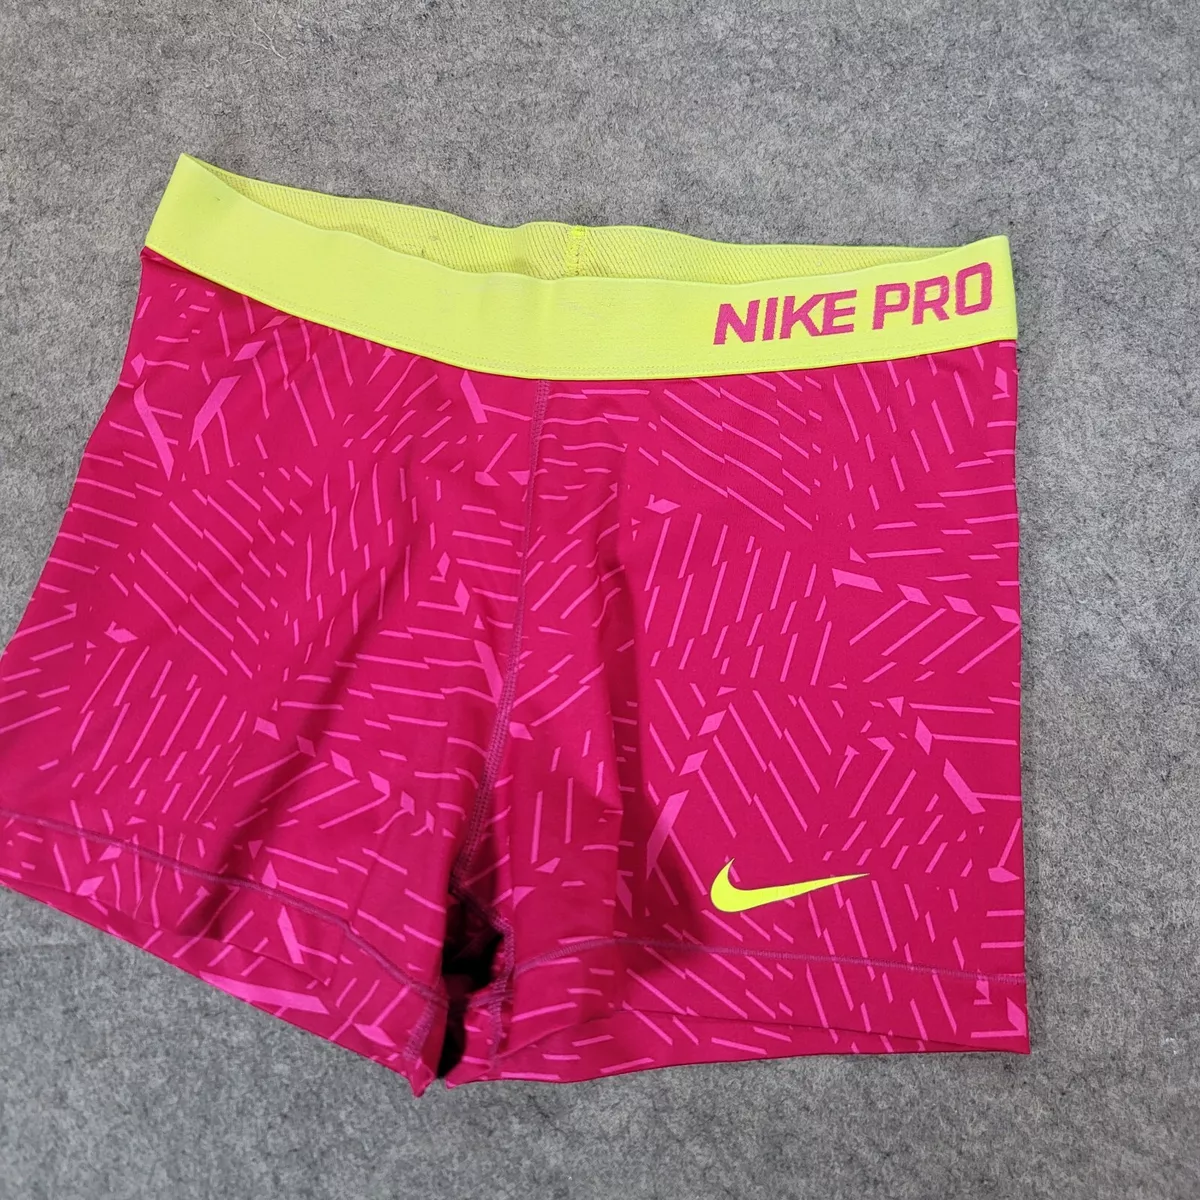 Nike Pro Shorts Womens Large Pink Yellow Spandex Dri Fit Gym Athletic